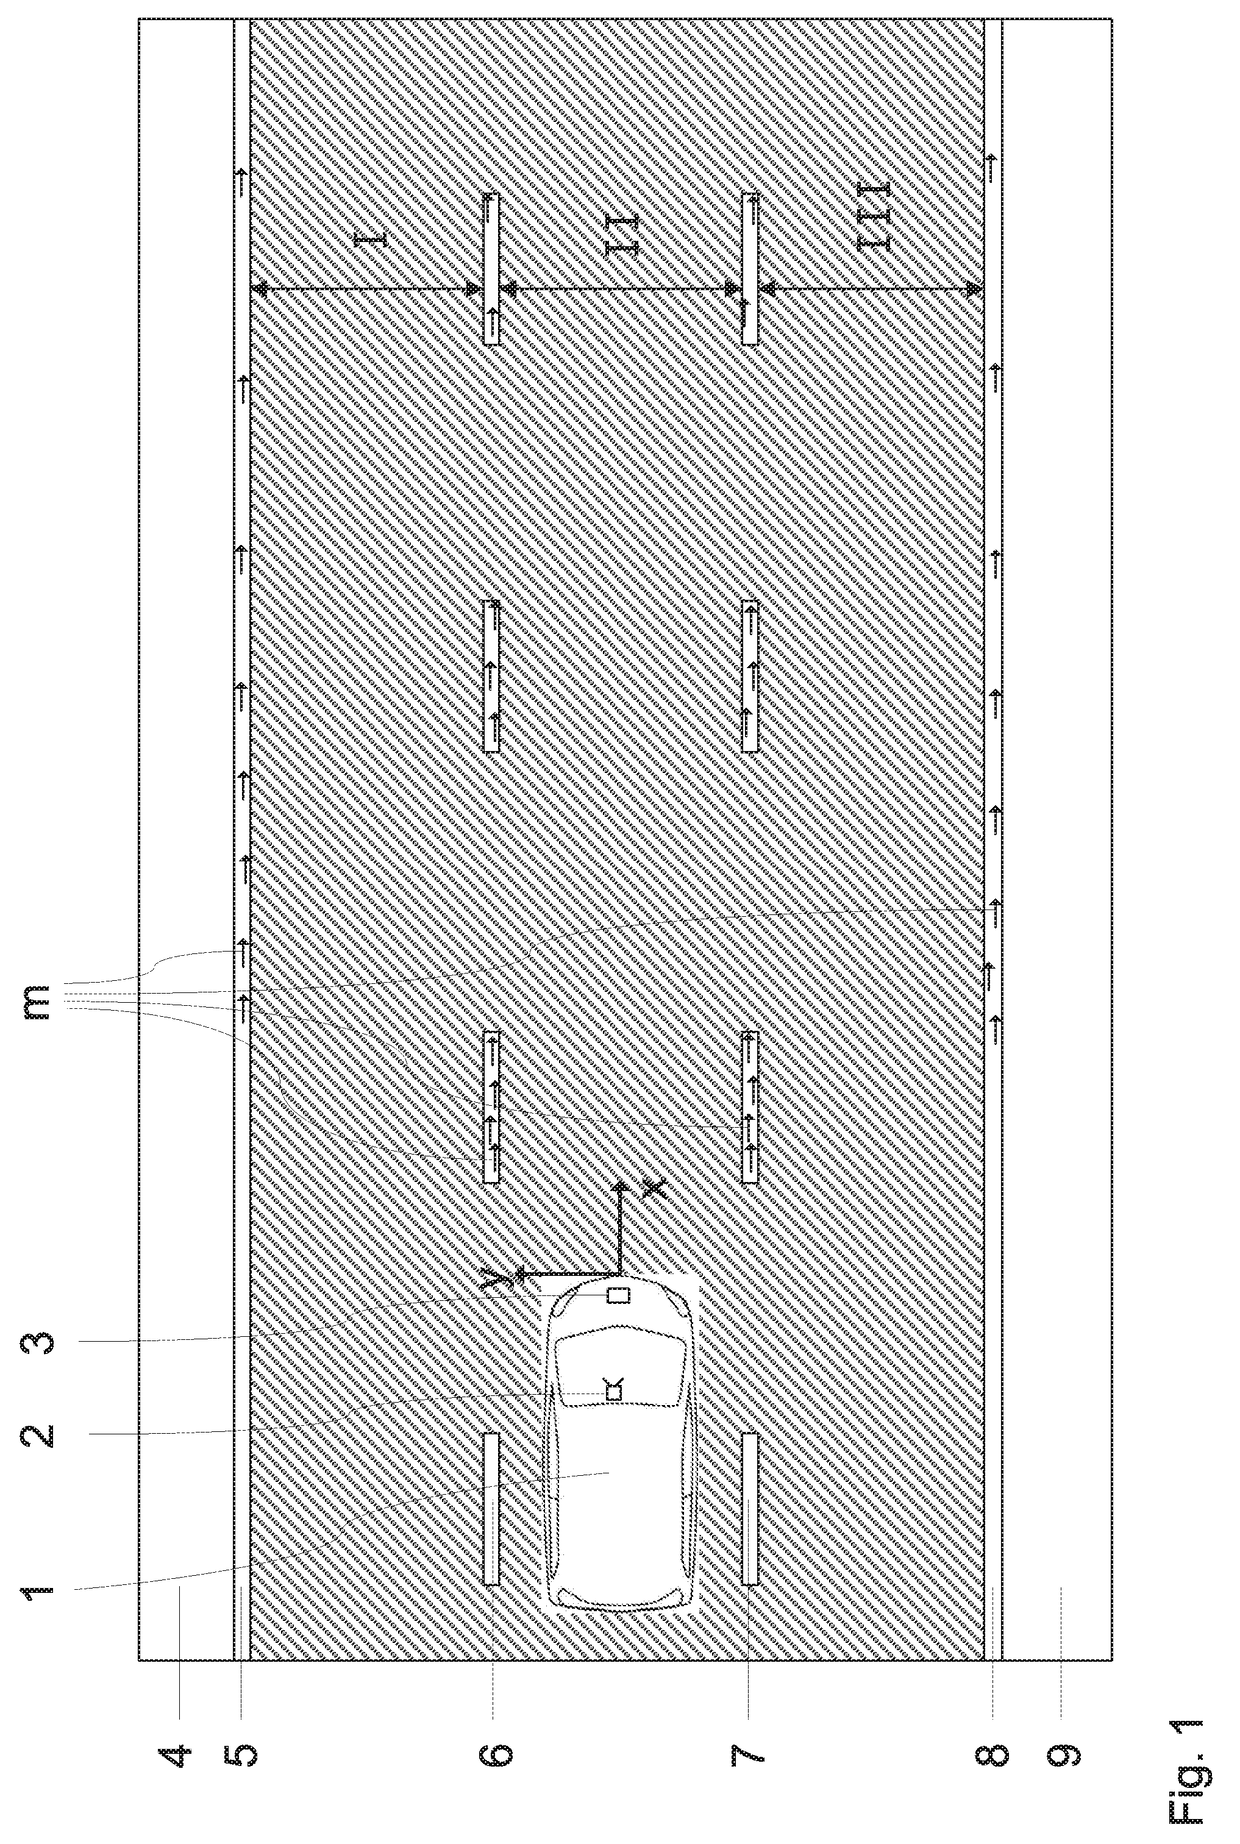 Method for estimating traffic lanes